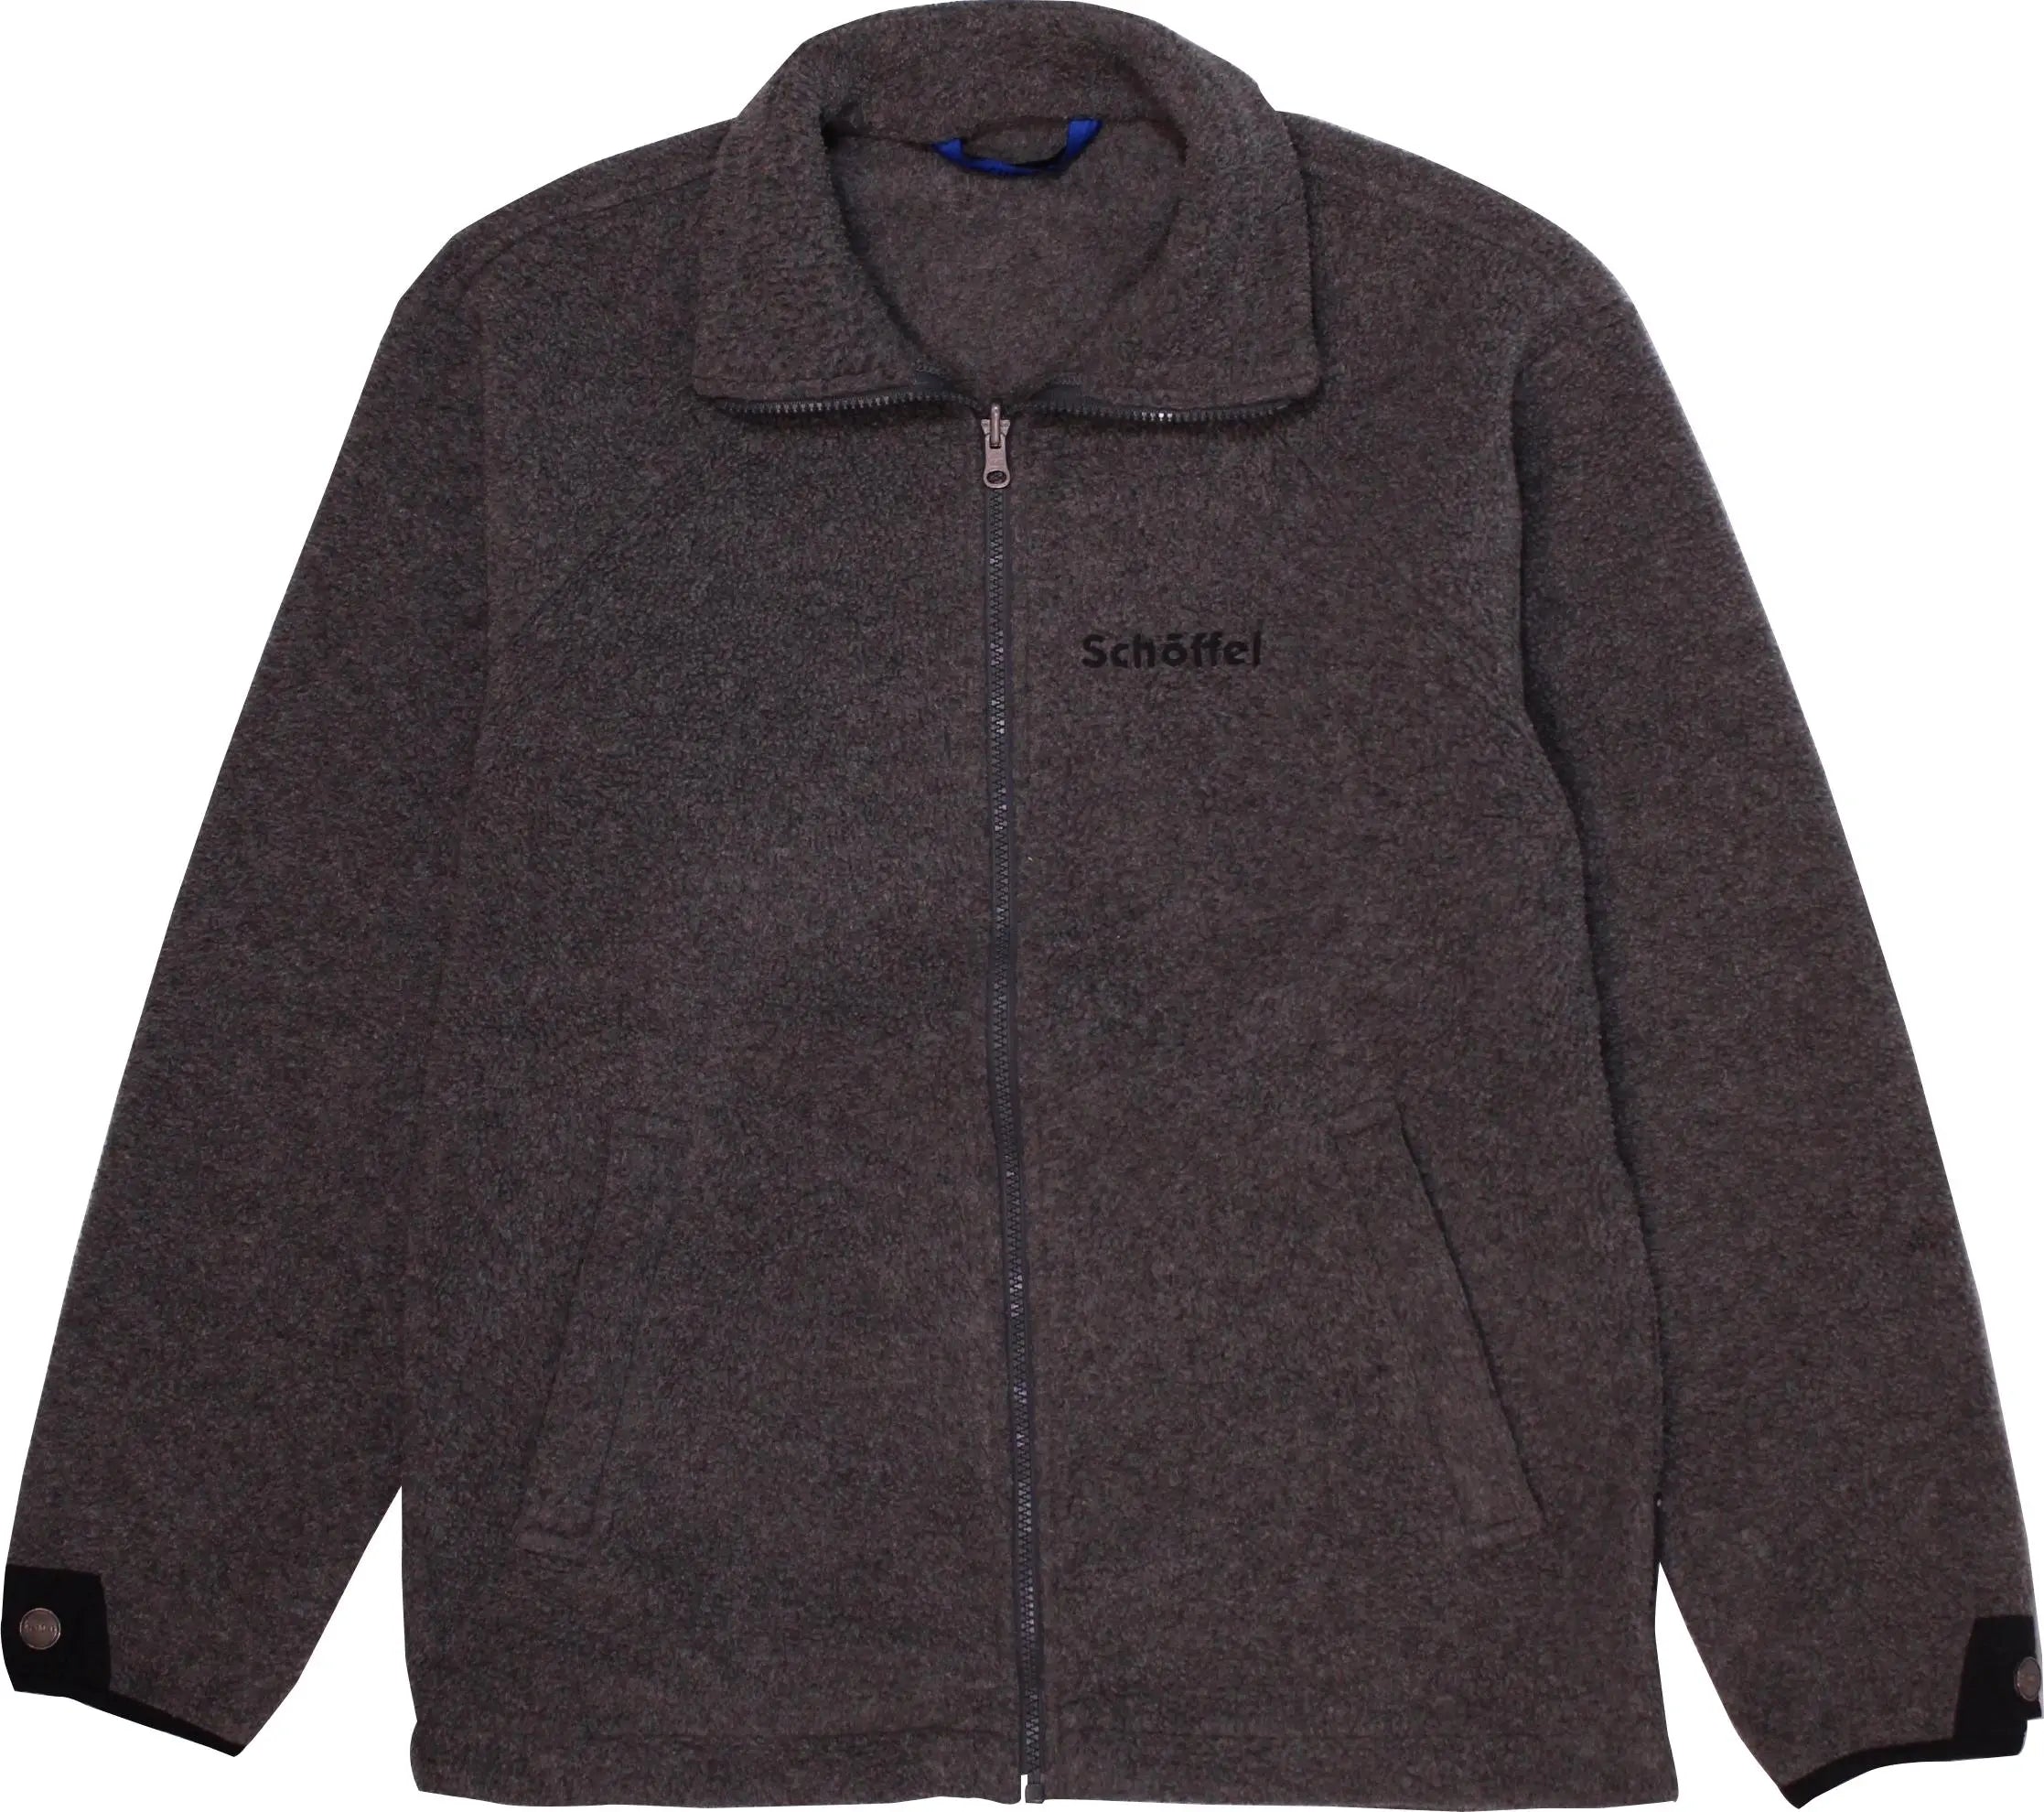 Schöffel - Grey Fleece Jacket- ThriftTale.com - Vintage and second handclothing